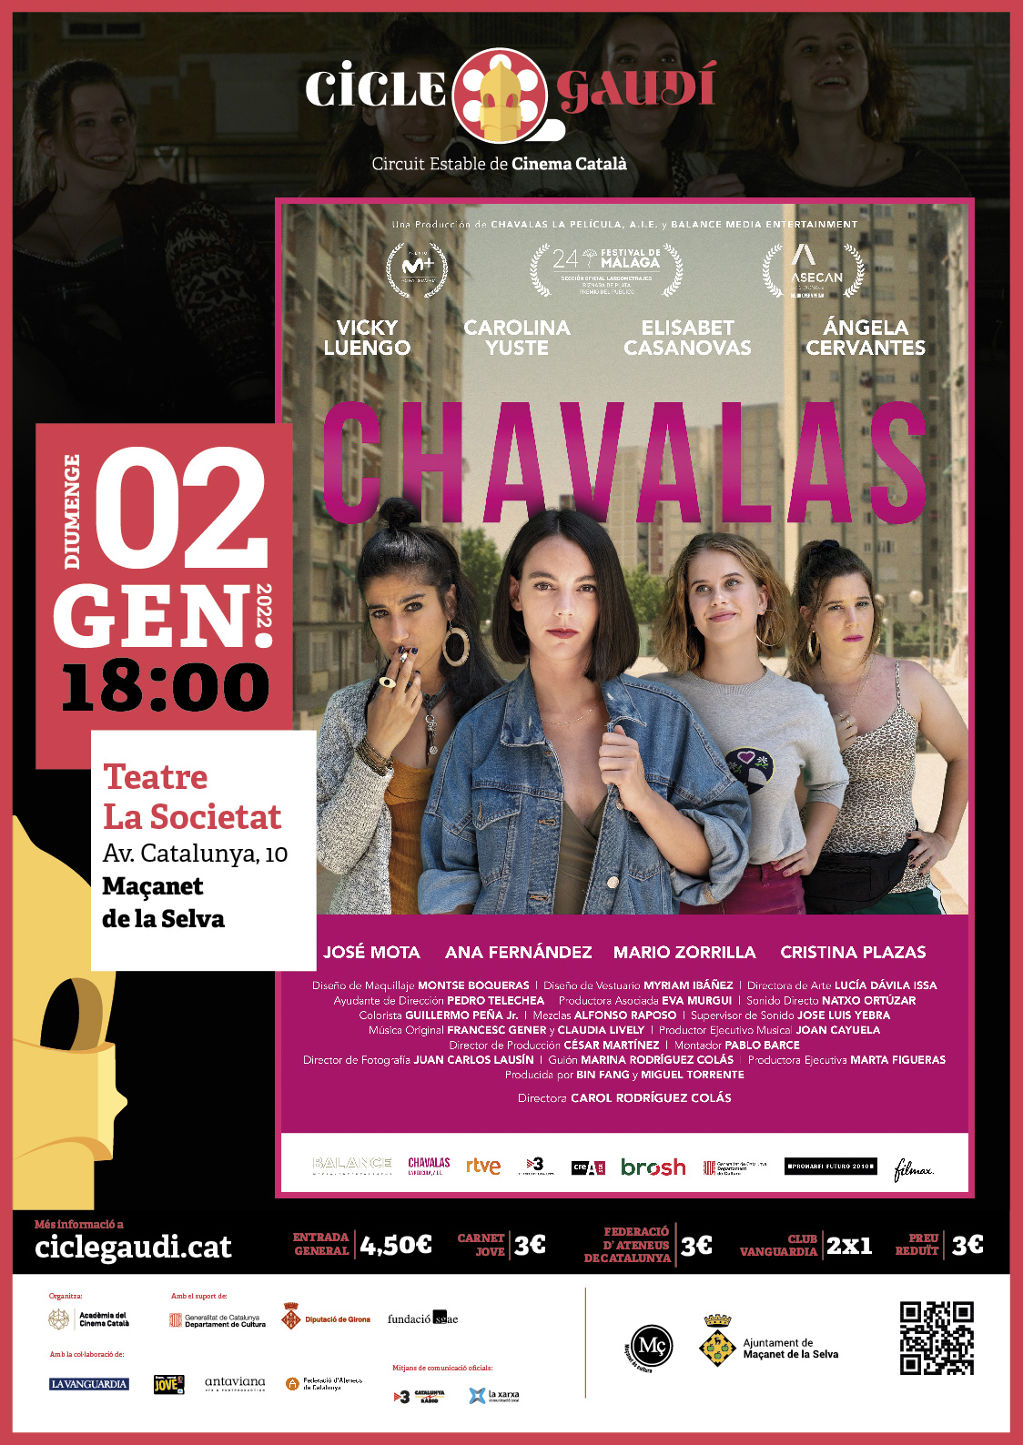 Chavalas - 7e5fd-VISUAL_A3_CHAVALAS_MACANET_DE_LA_SELVA.jpg